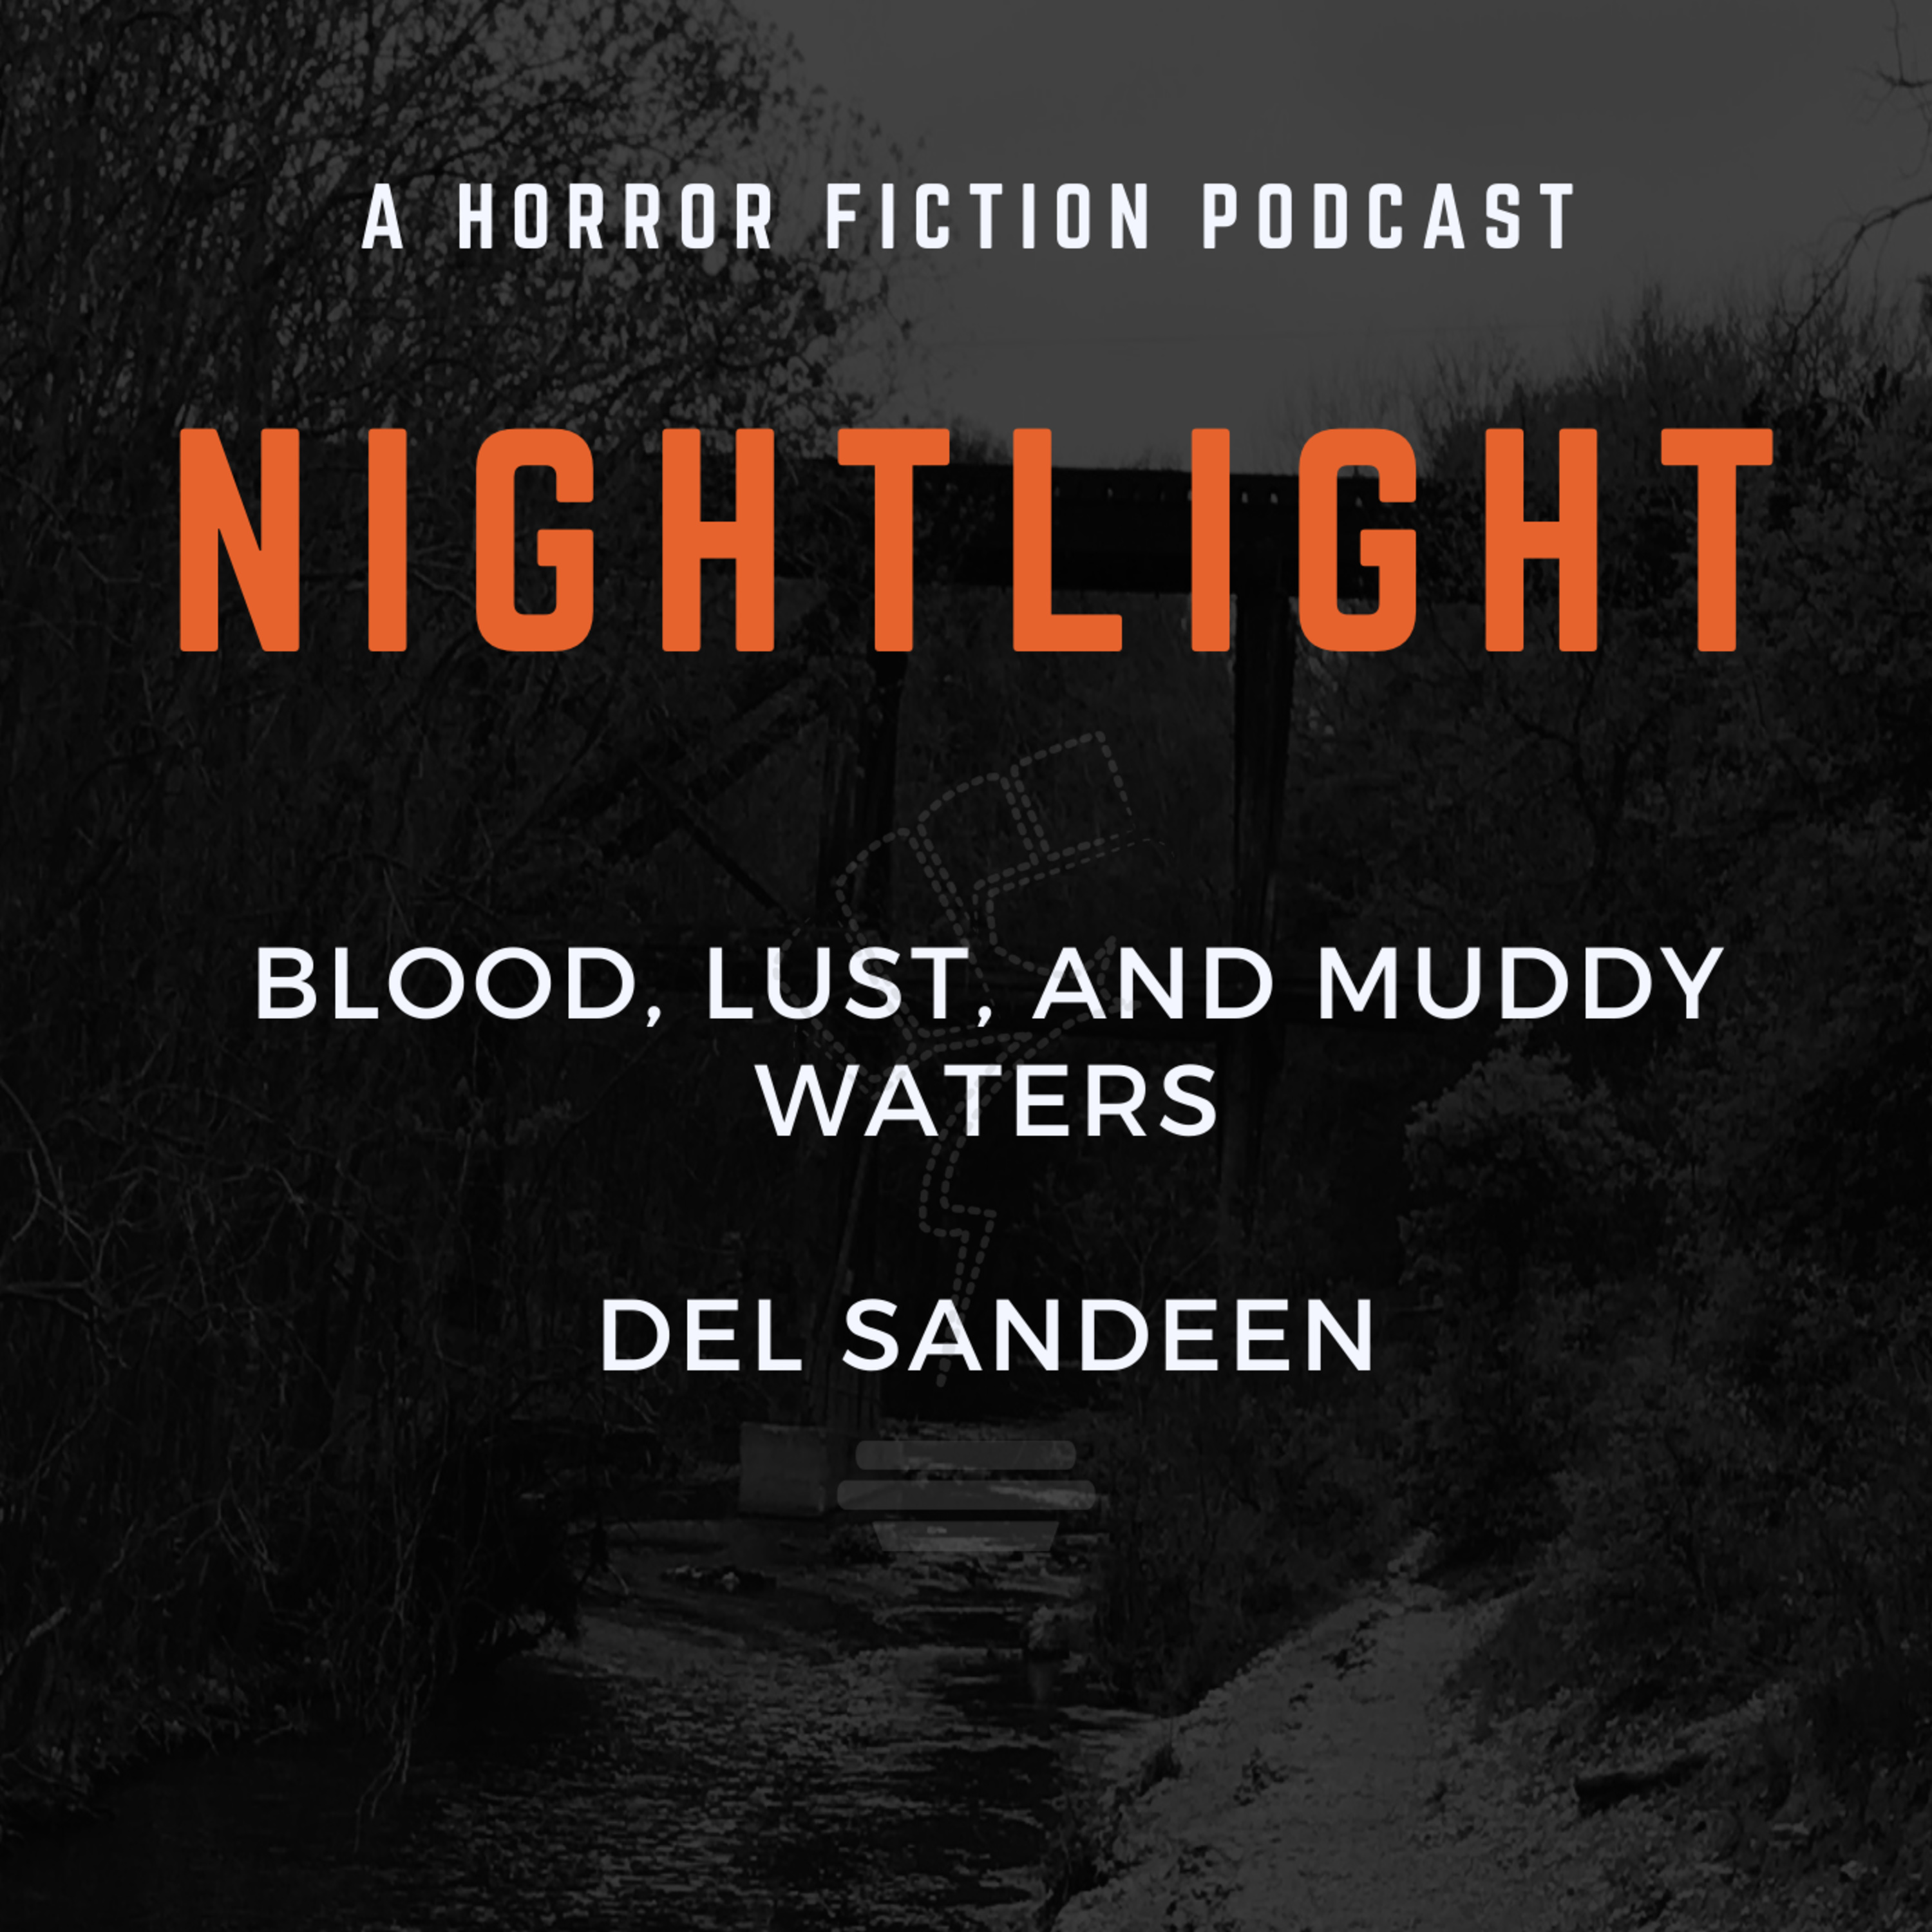 "NIGHTLIGHT: A Horror Fiction Podcast" Podcast